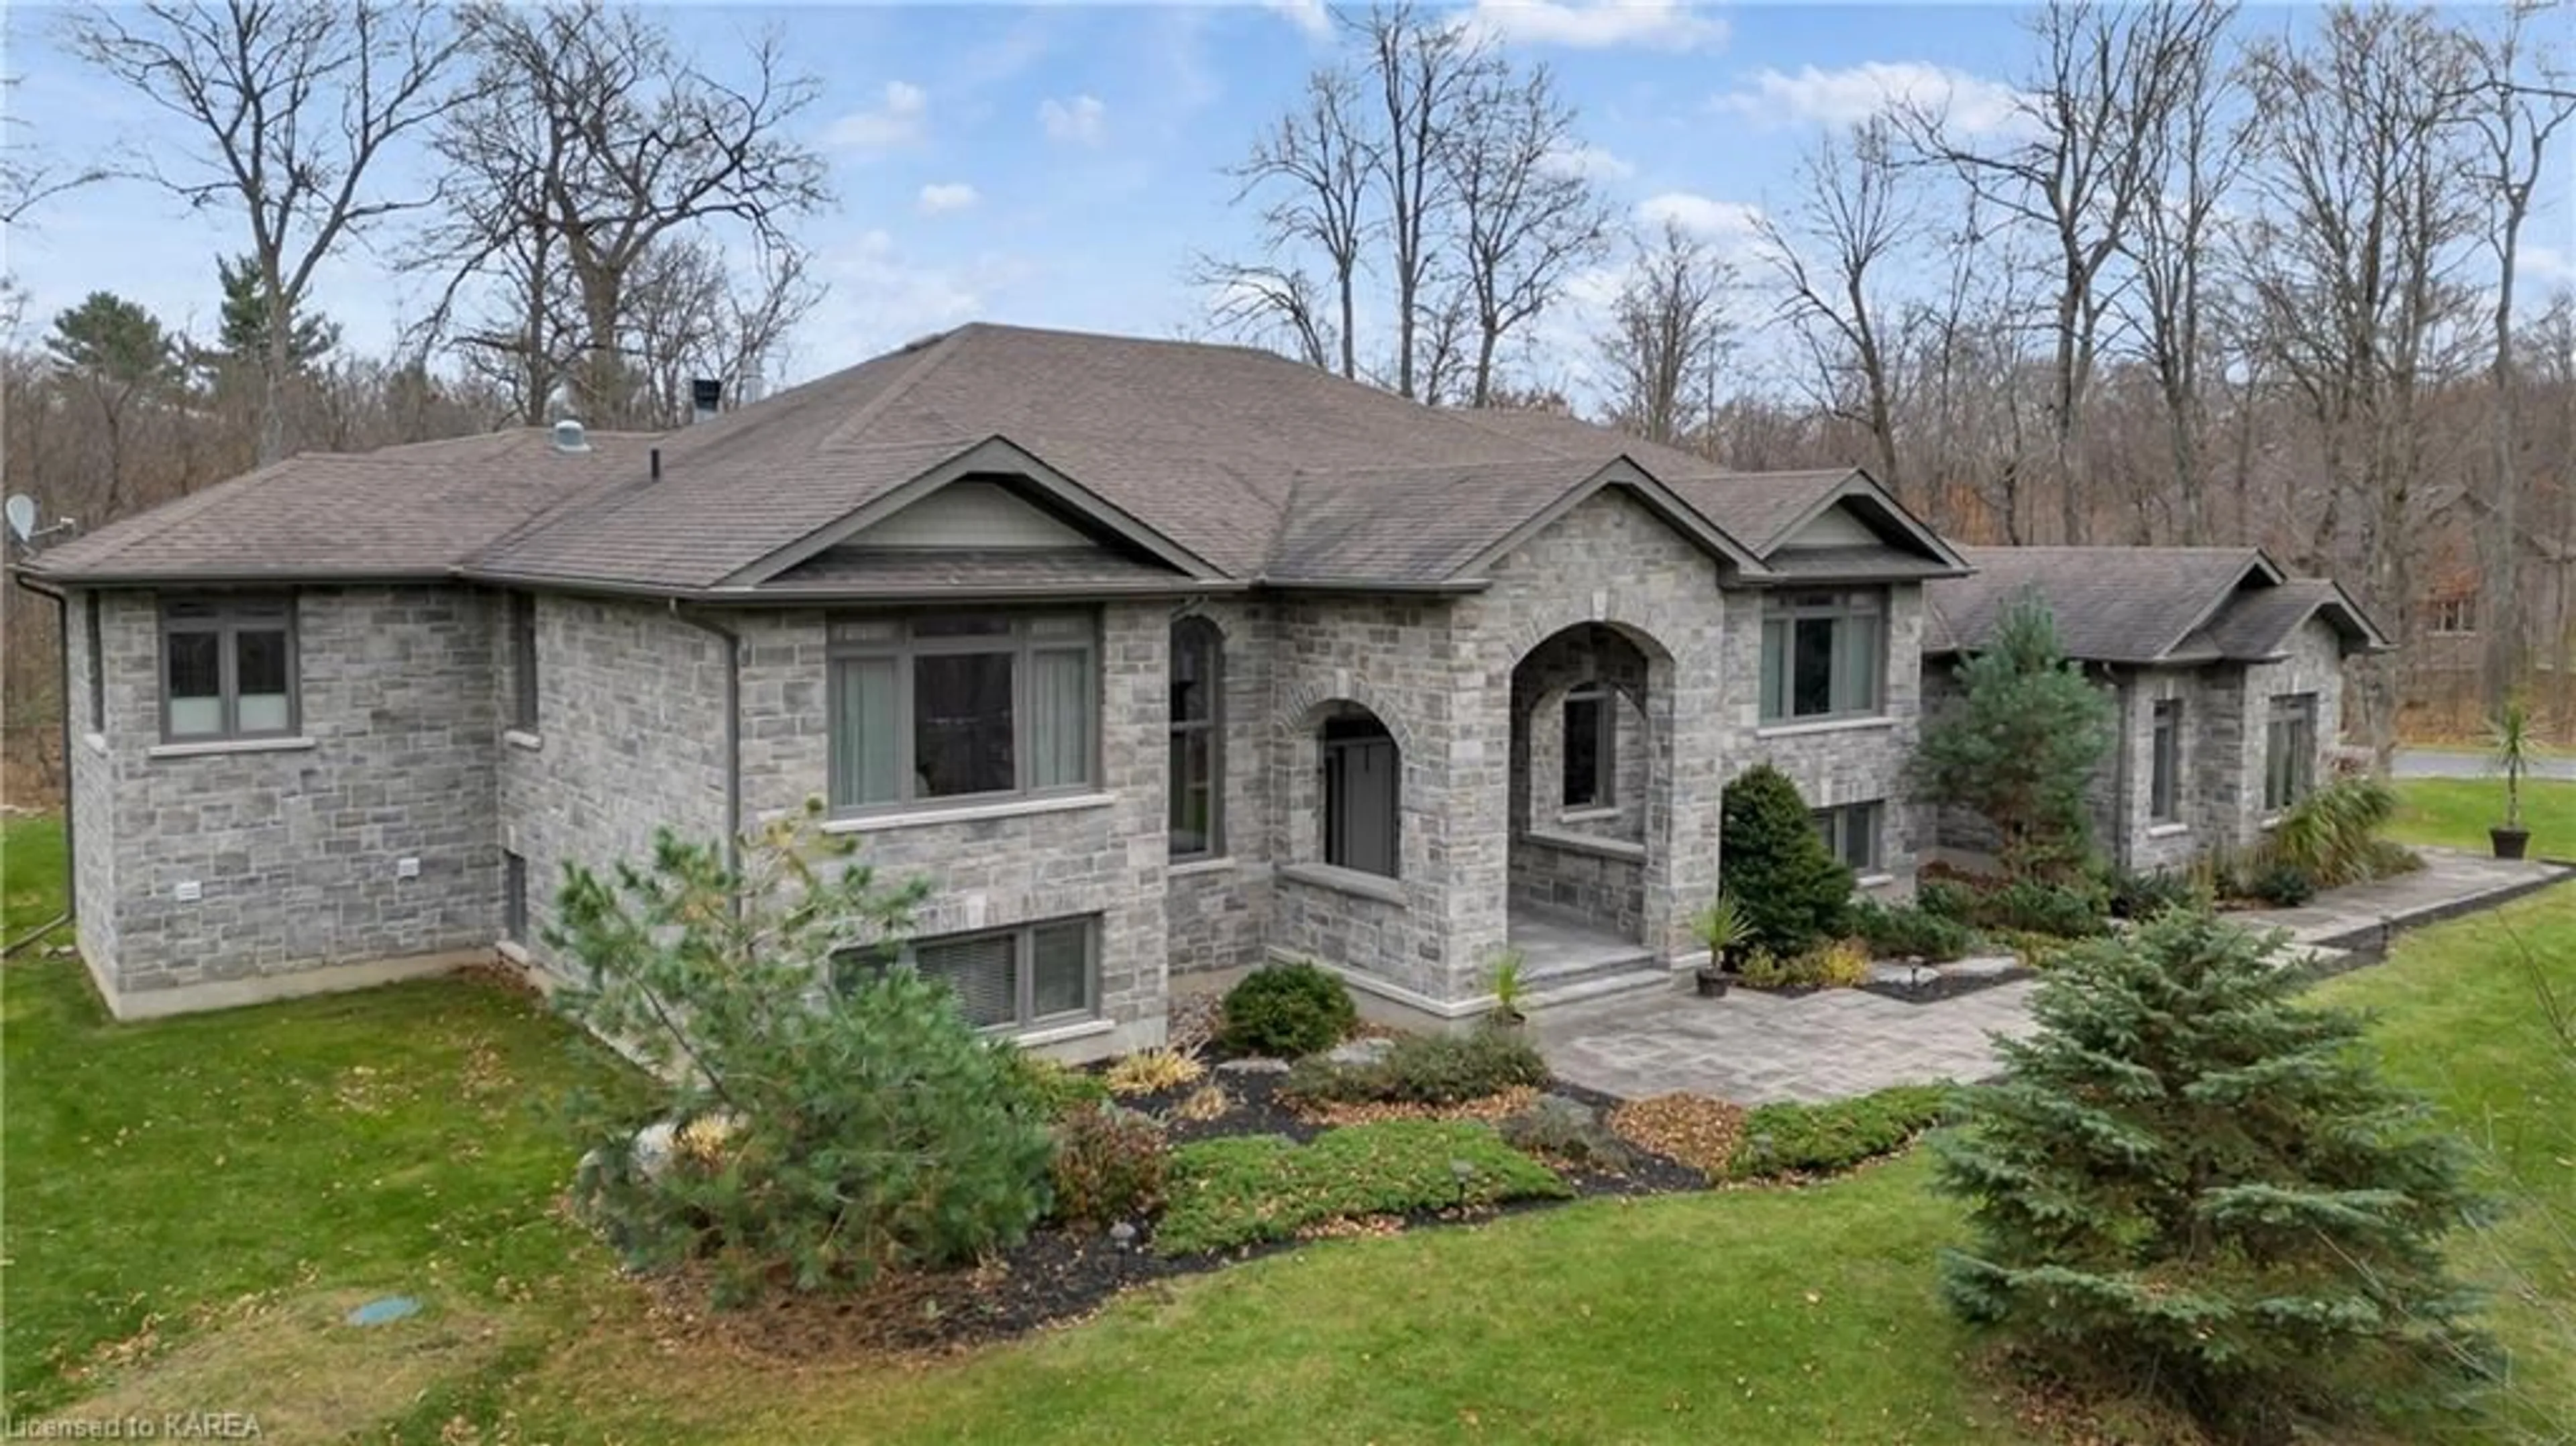 Home with brick exterior material for 120 Deer Creek Dr, Elginburg Ontario K0H 1M0